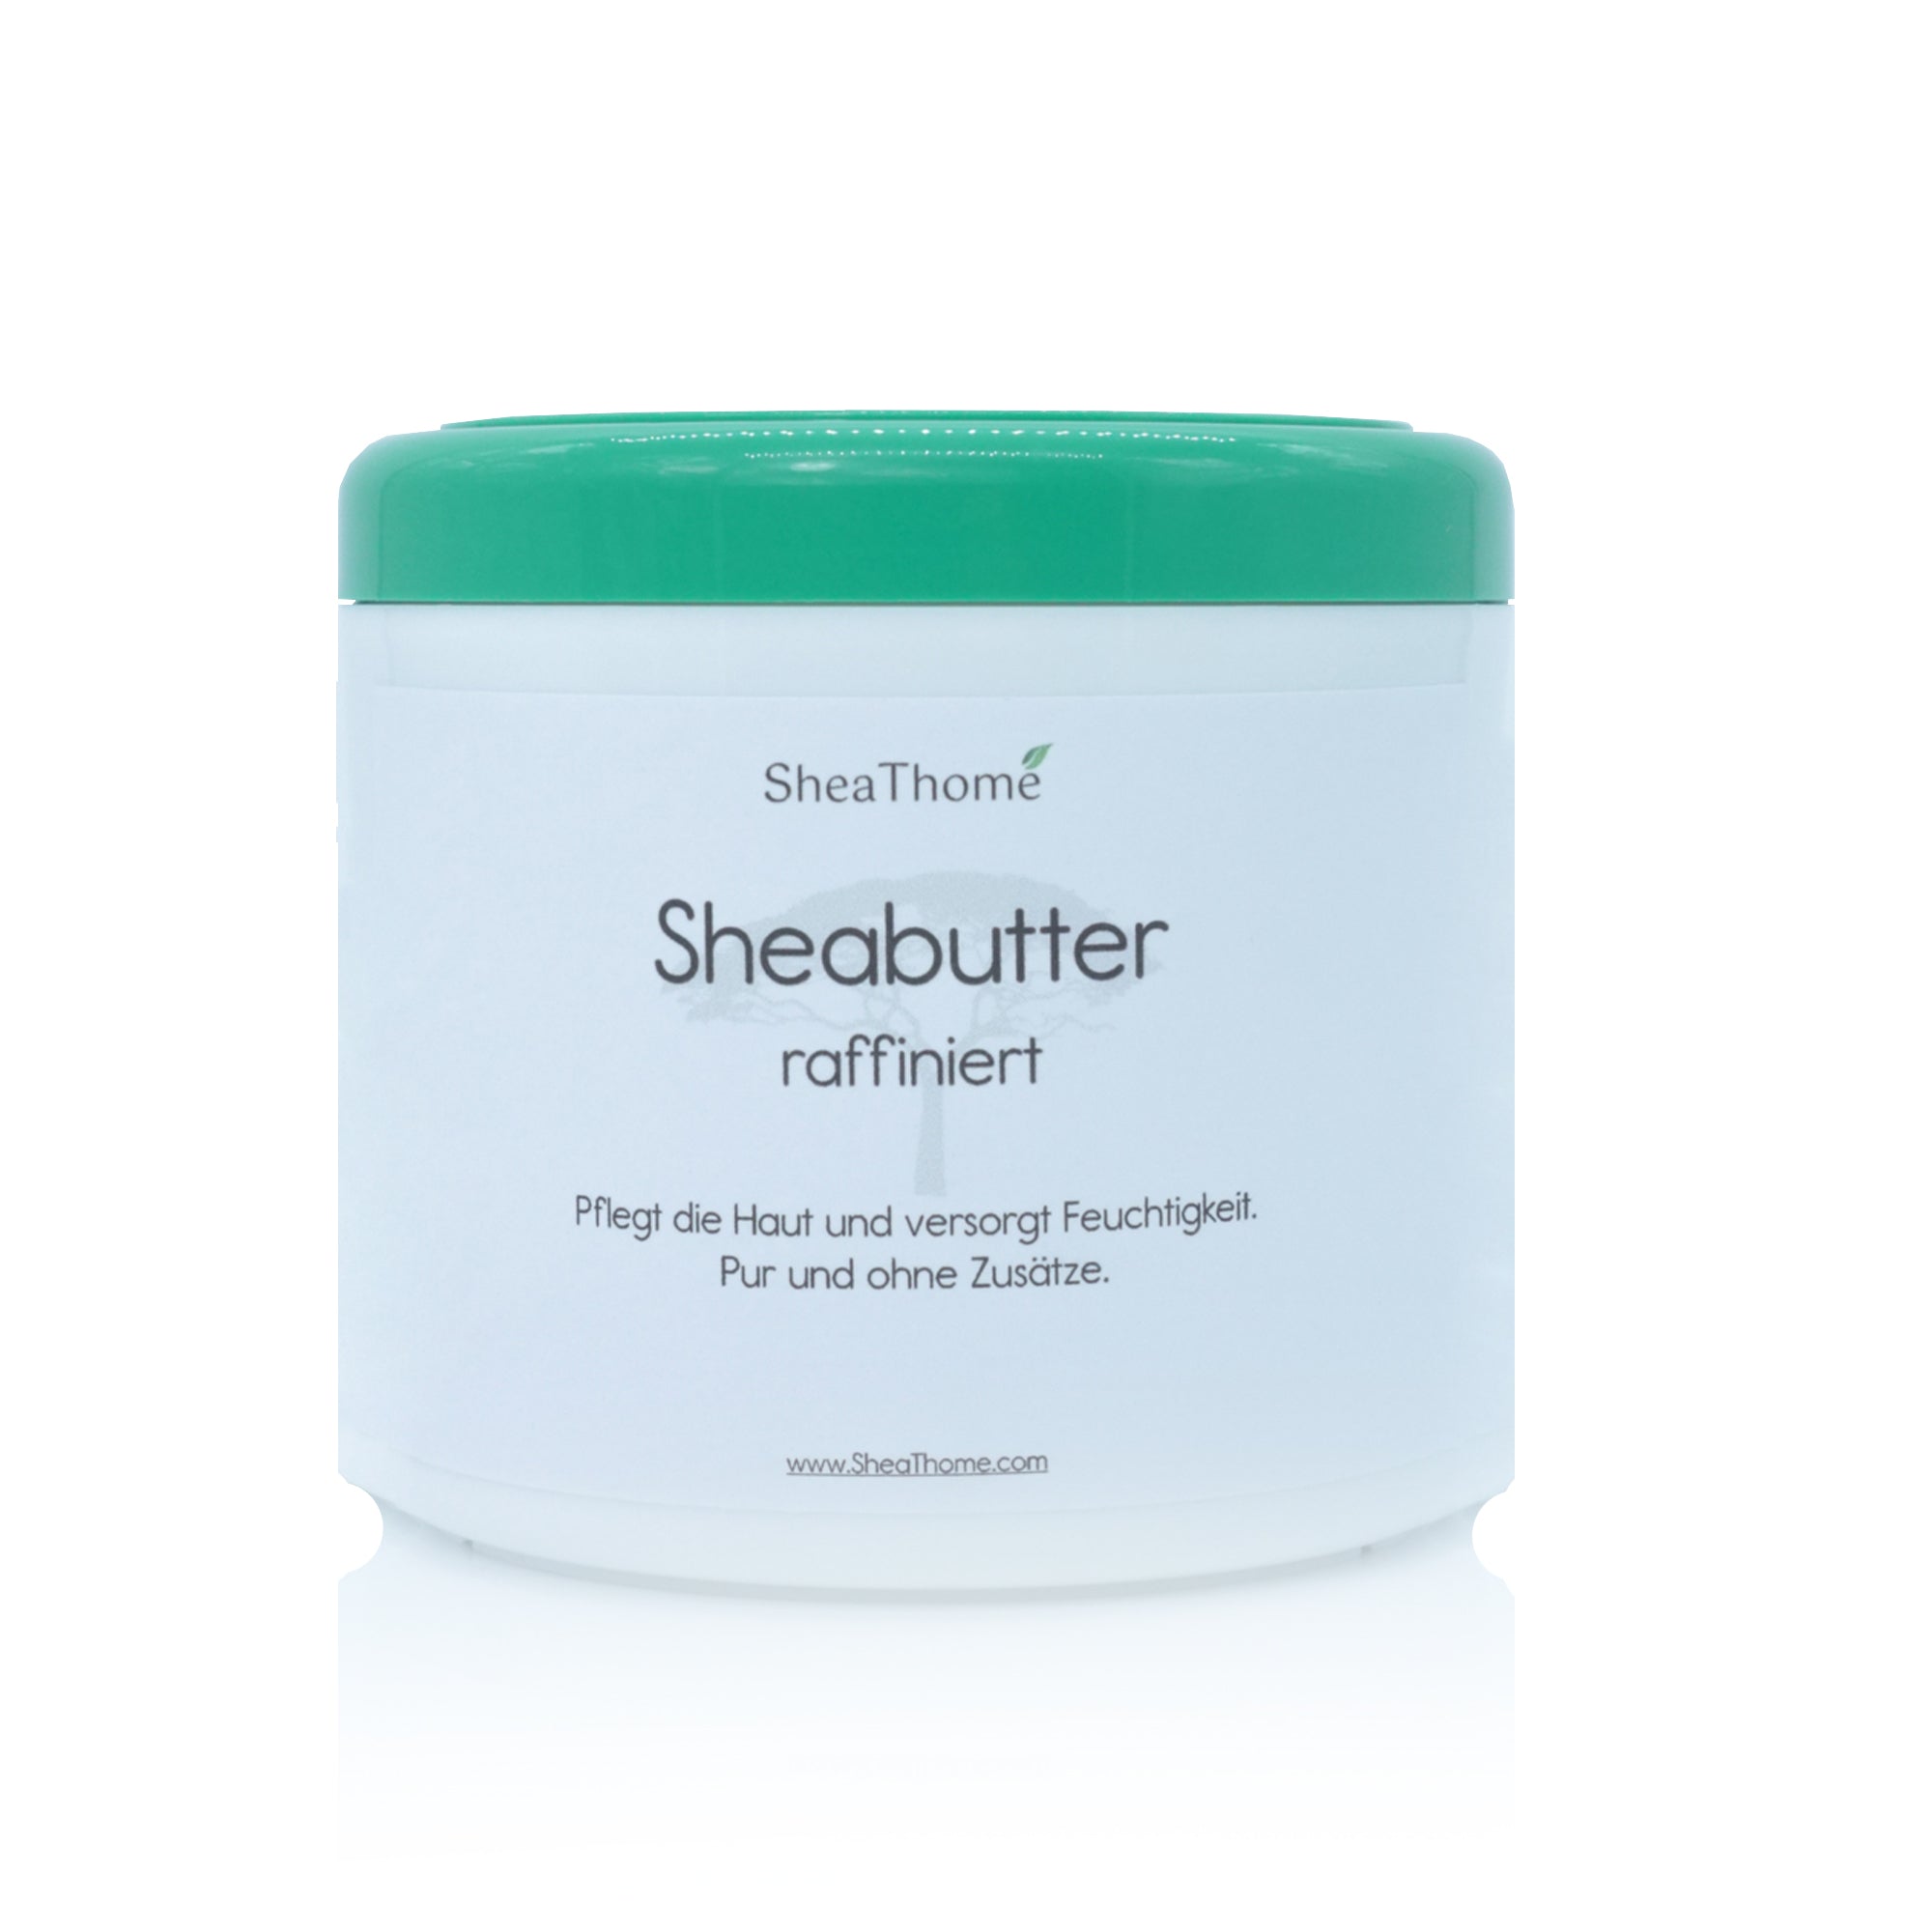 Sheabutter (raffiniert) - SheaThomé